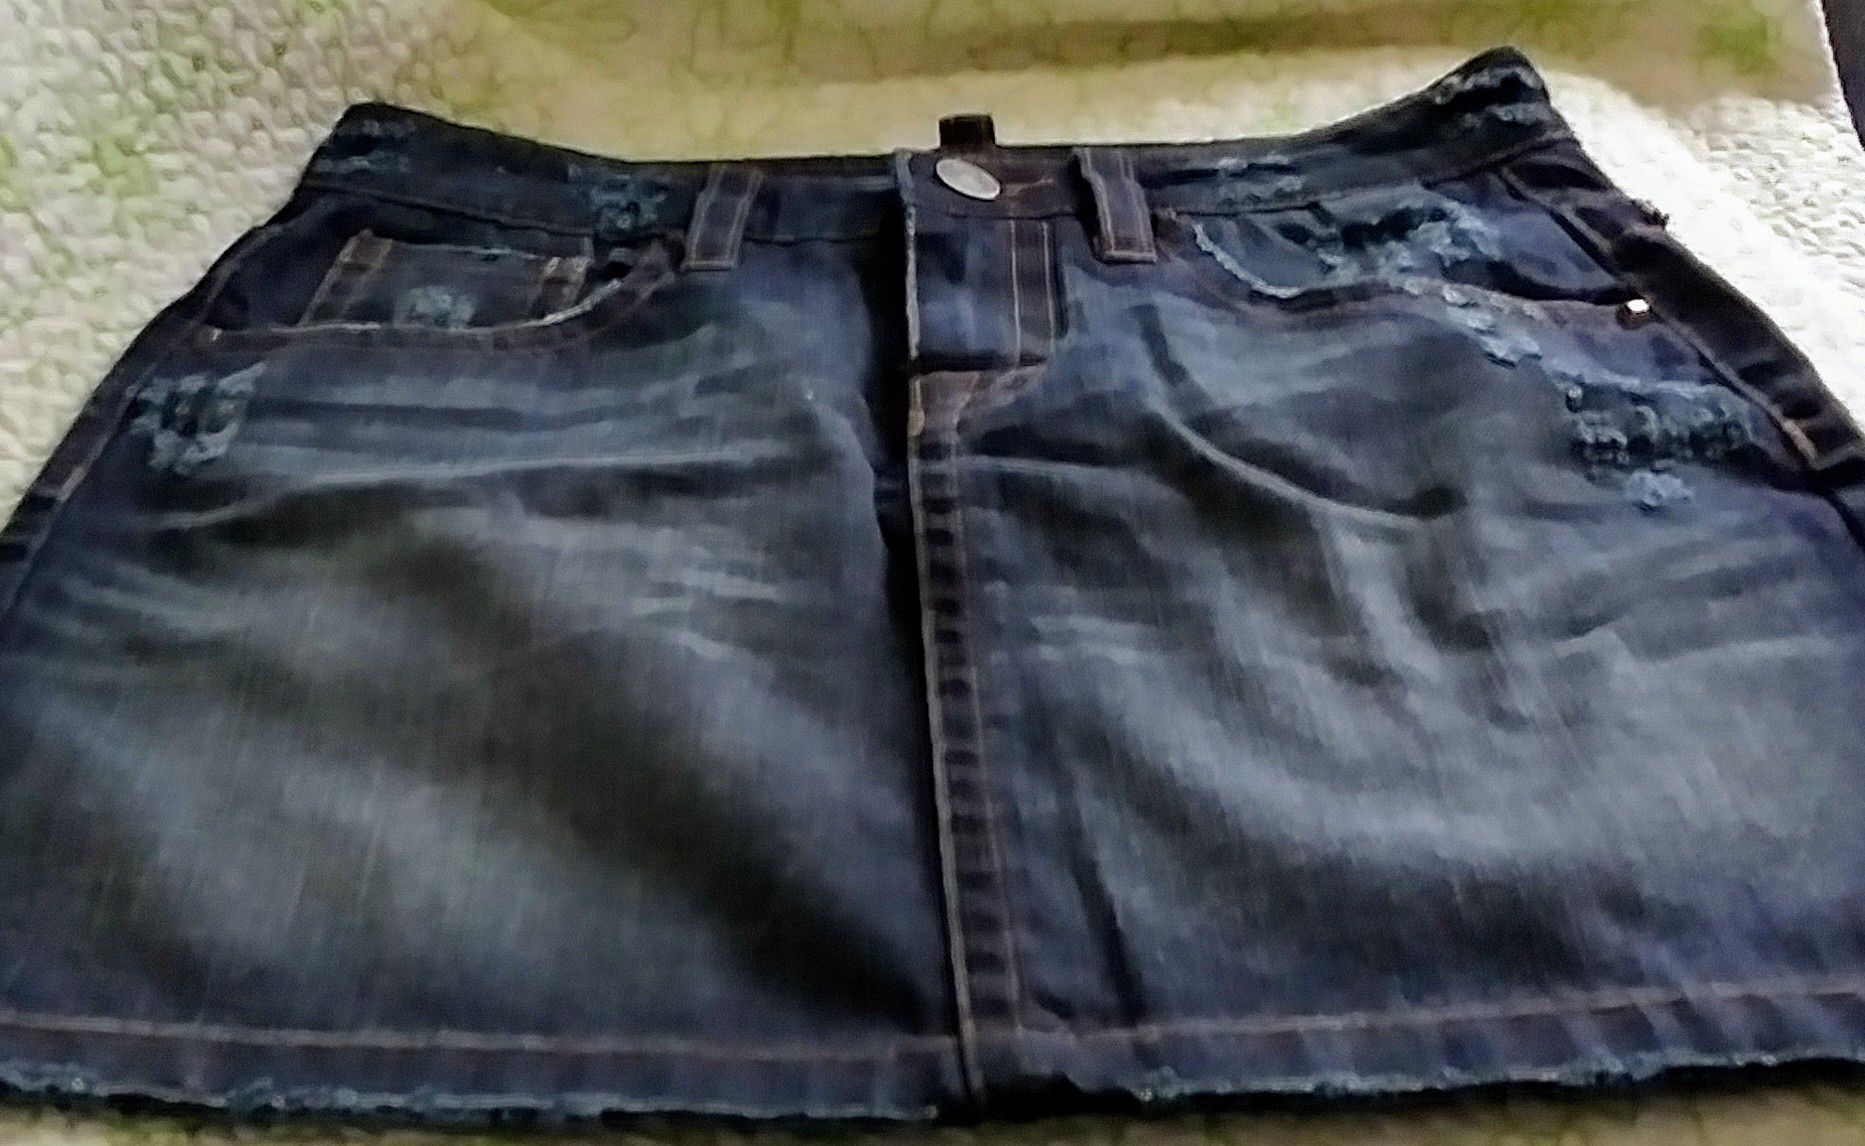 NEW. Vintage Victoria's Secret - London jeans. Distressed Jean mini skirt. Silverstone stud detailing. Size 2